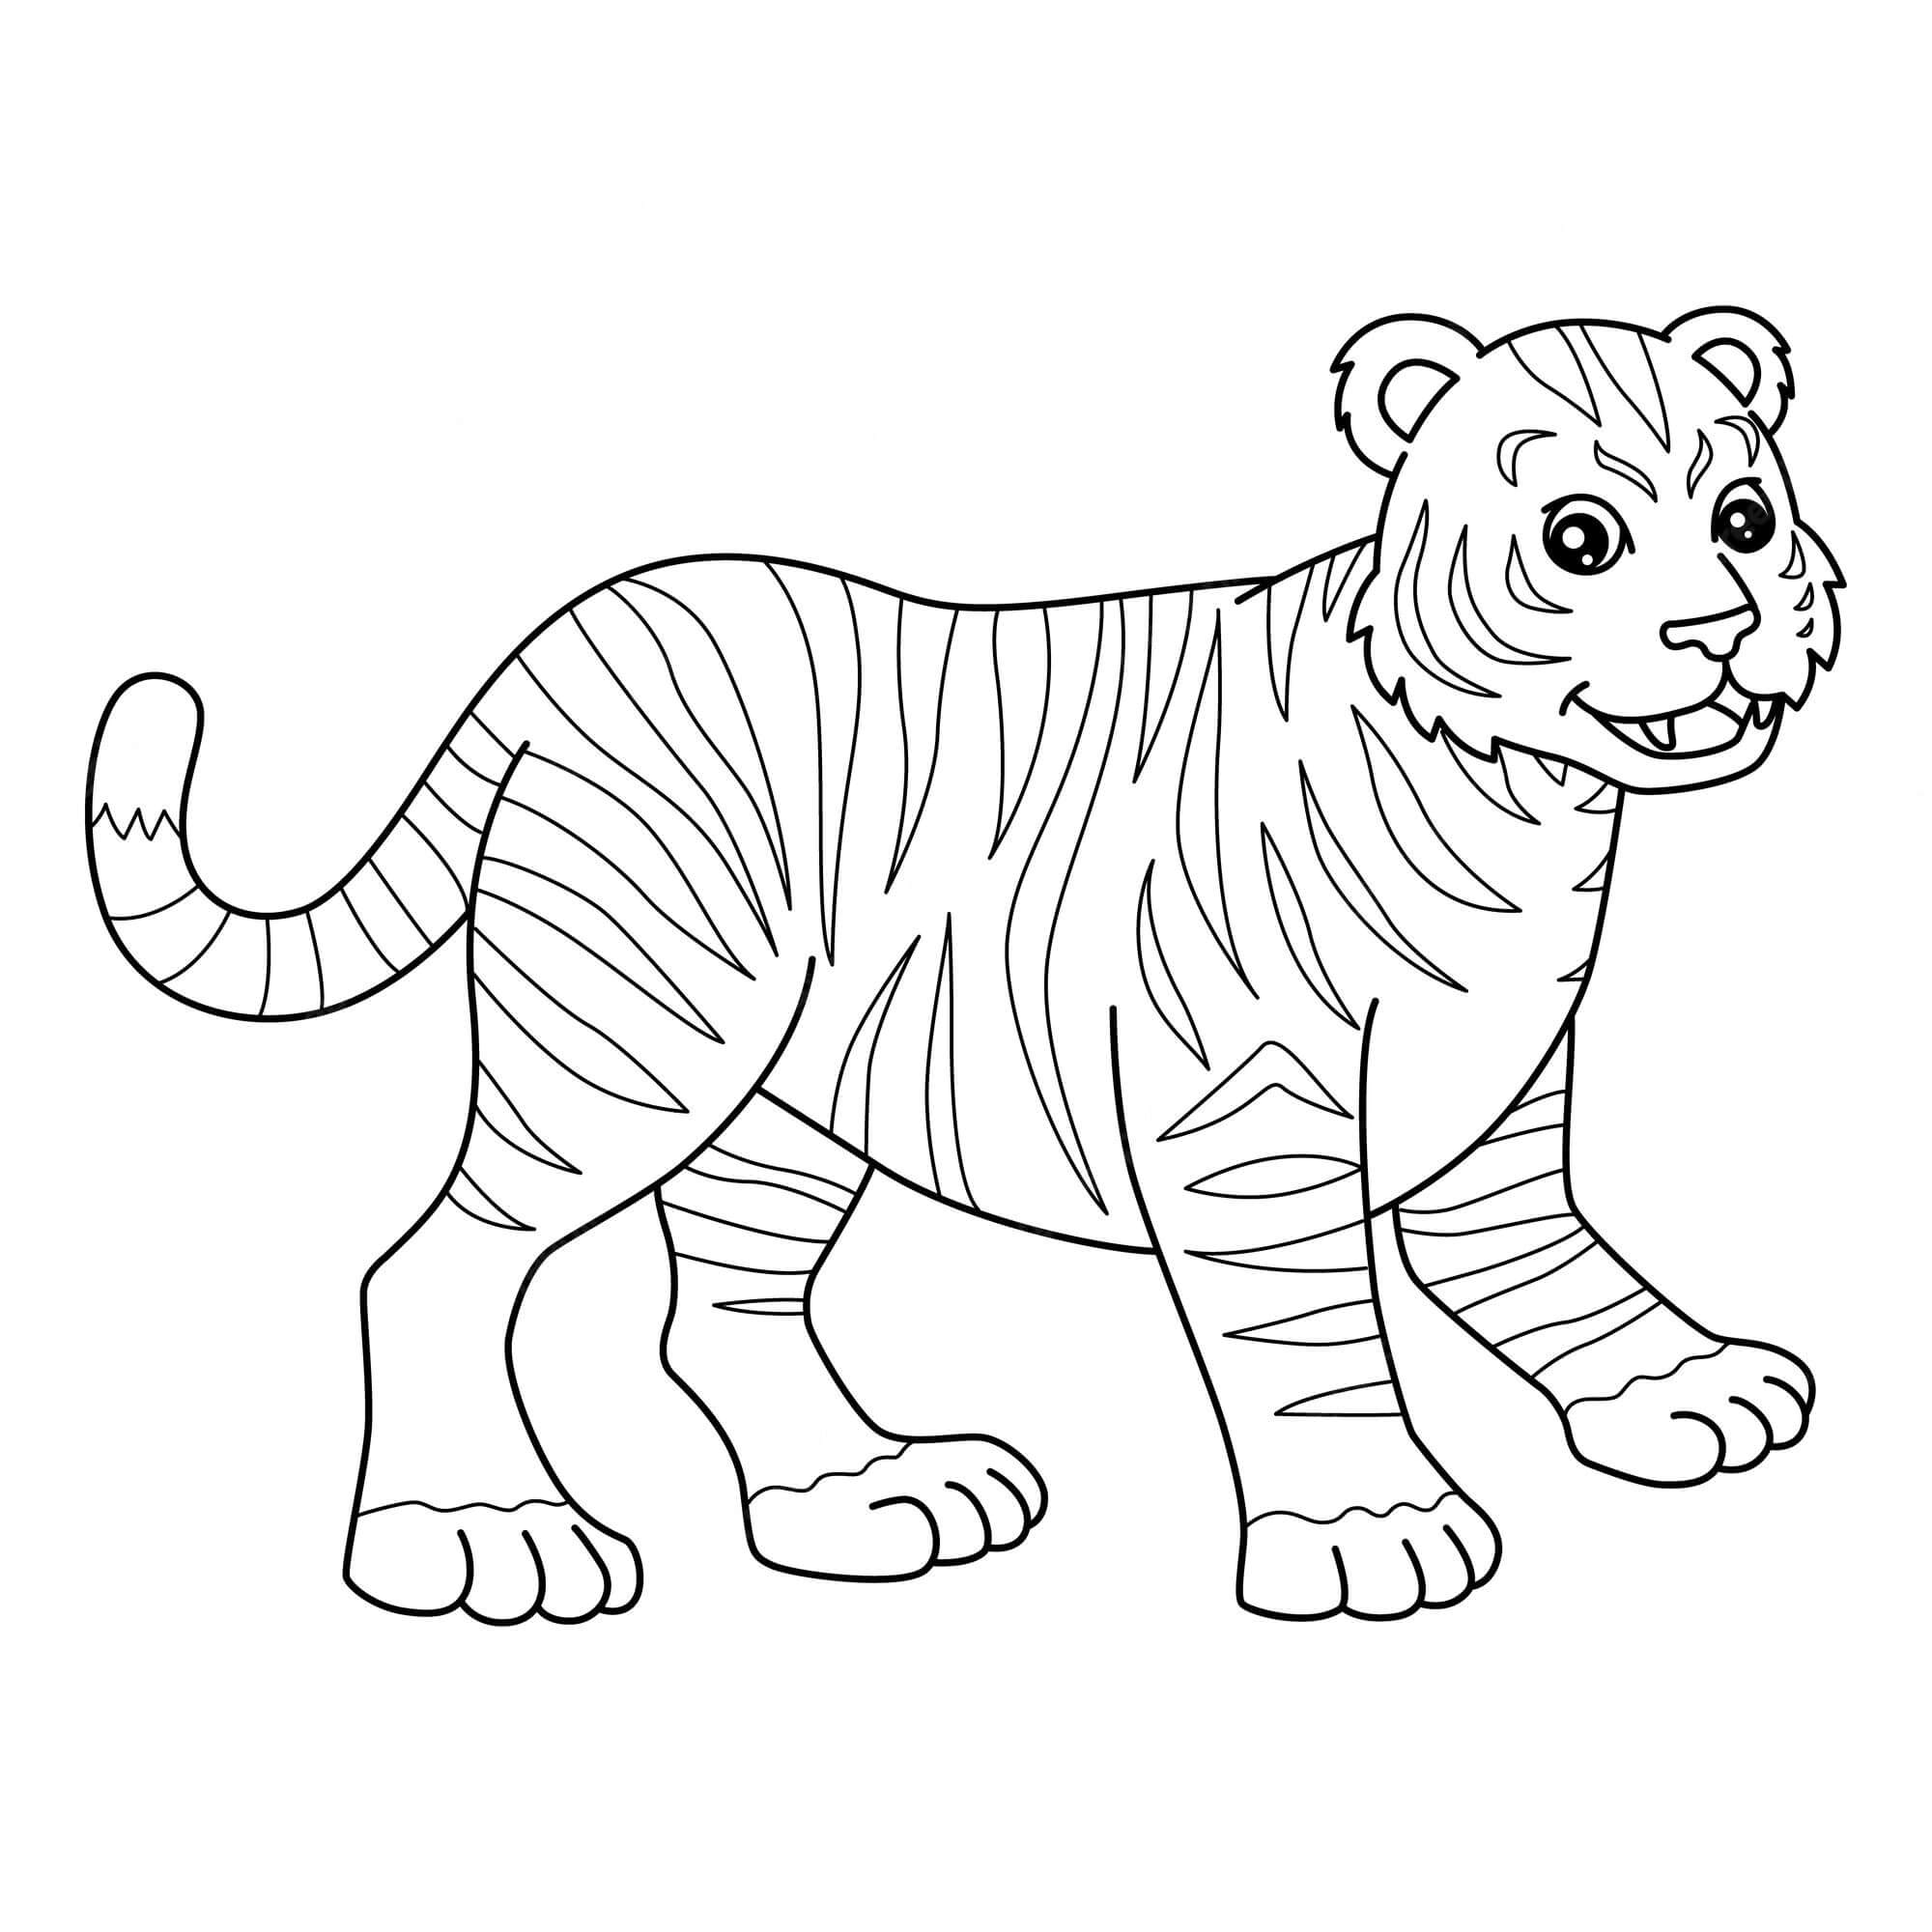 Divertido Tigre para colorir